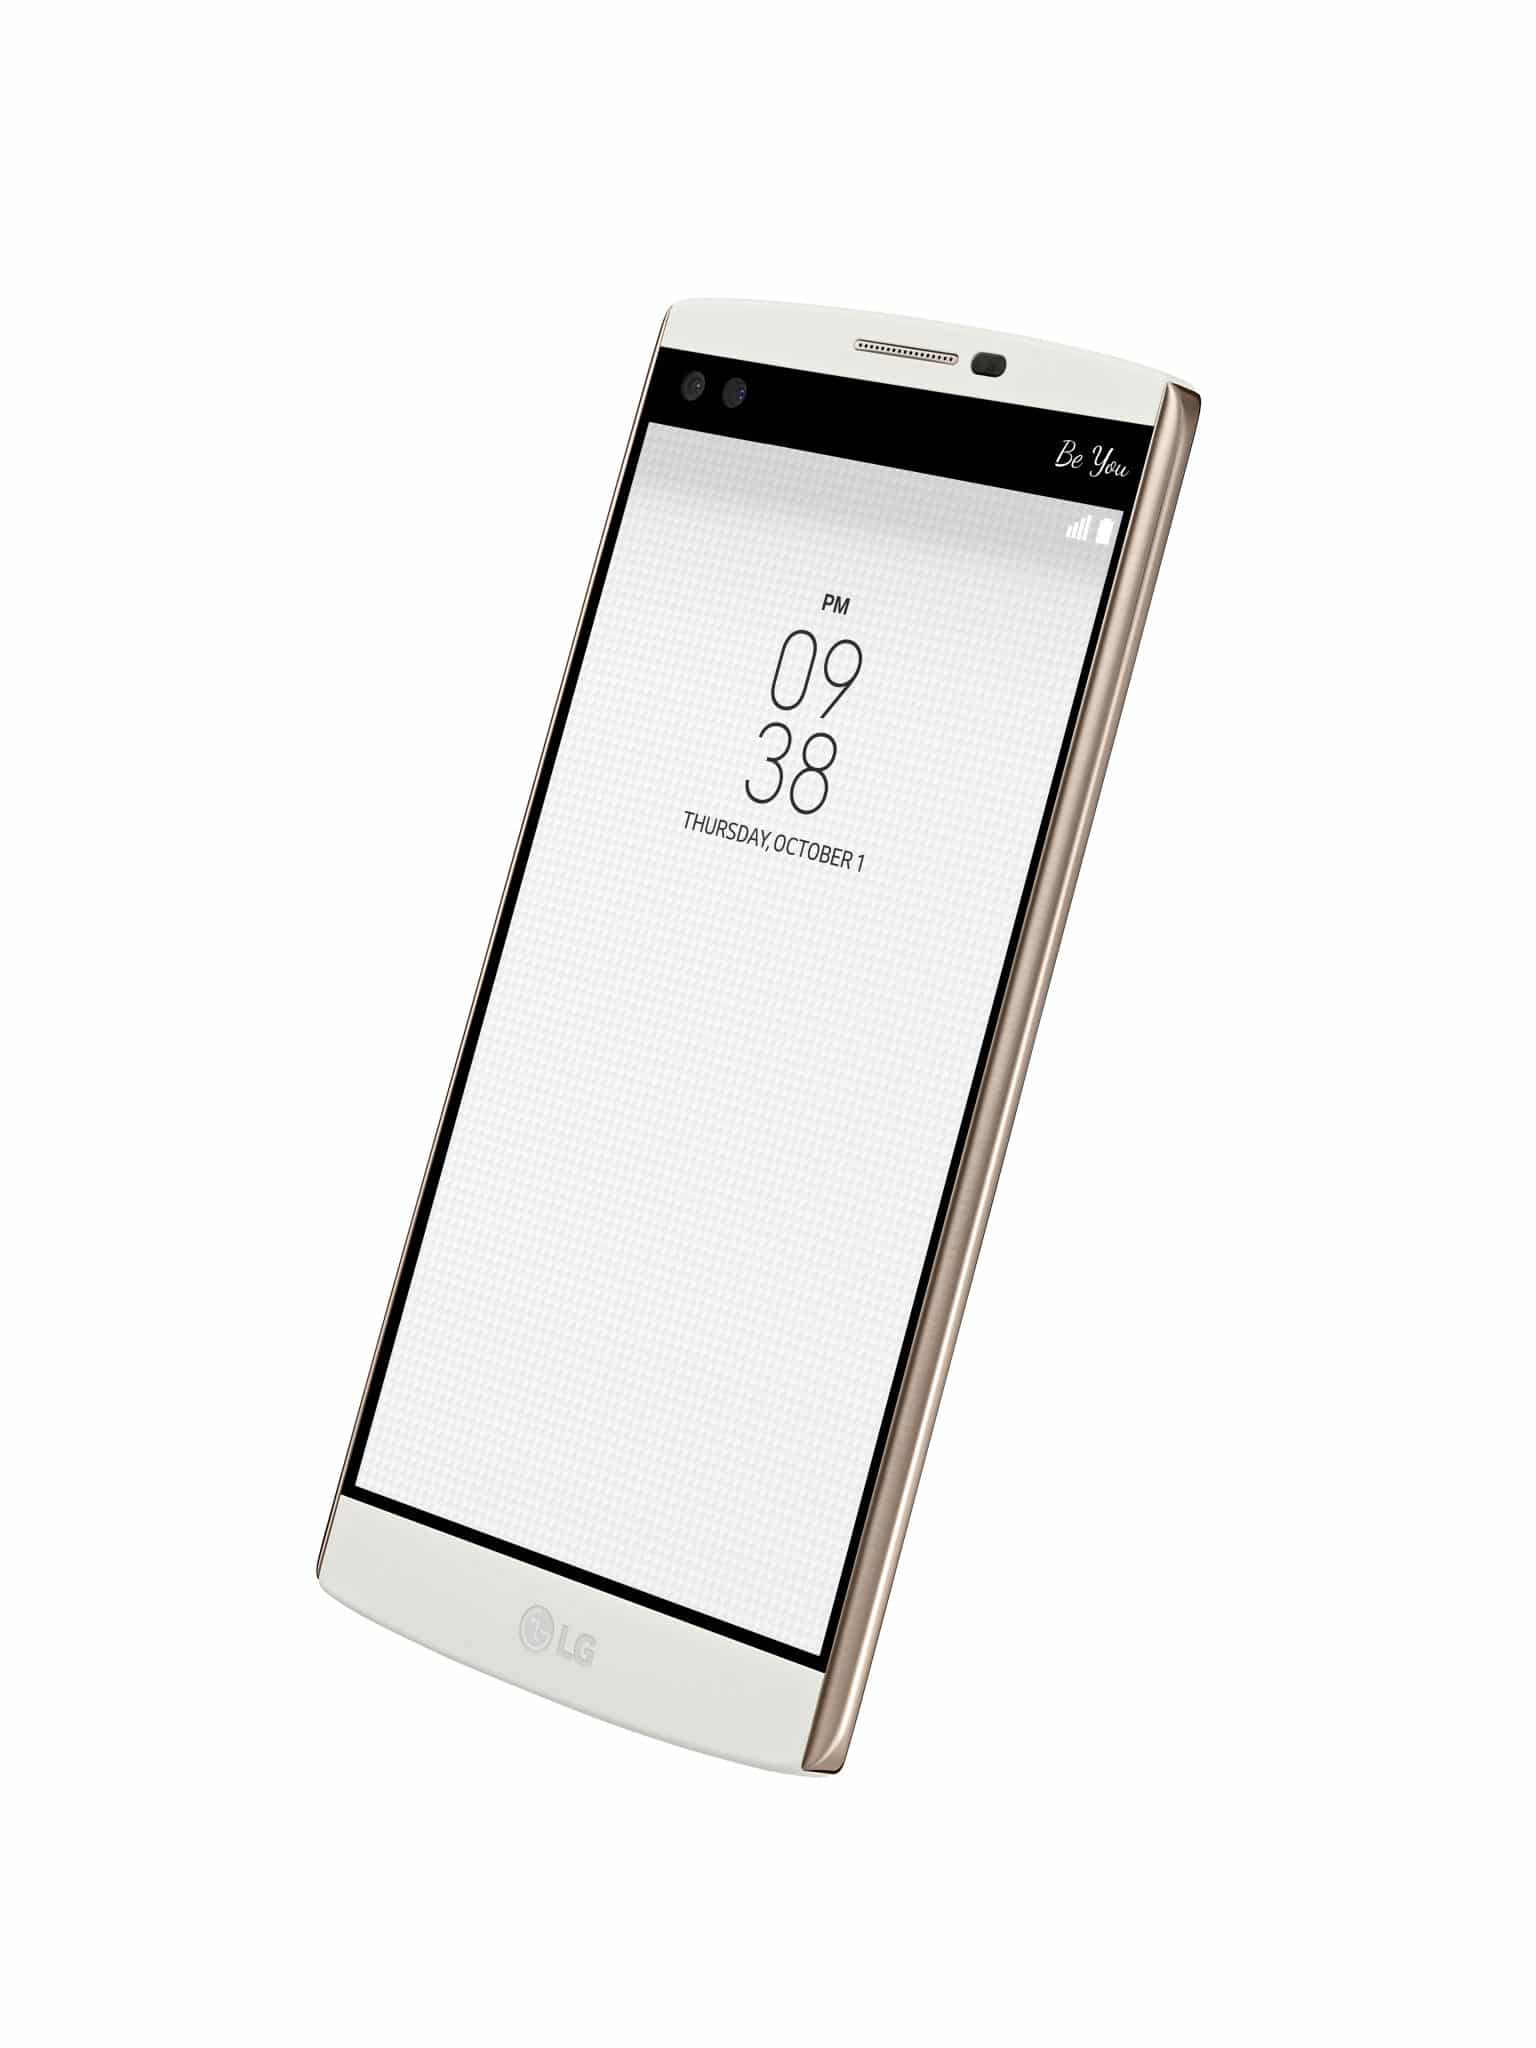 LG V10 fata lateral alb alta perspectiva